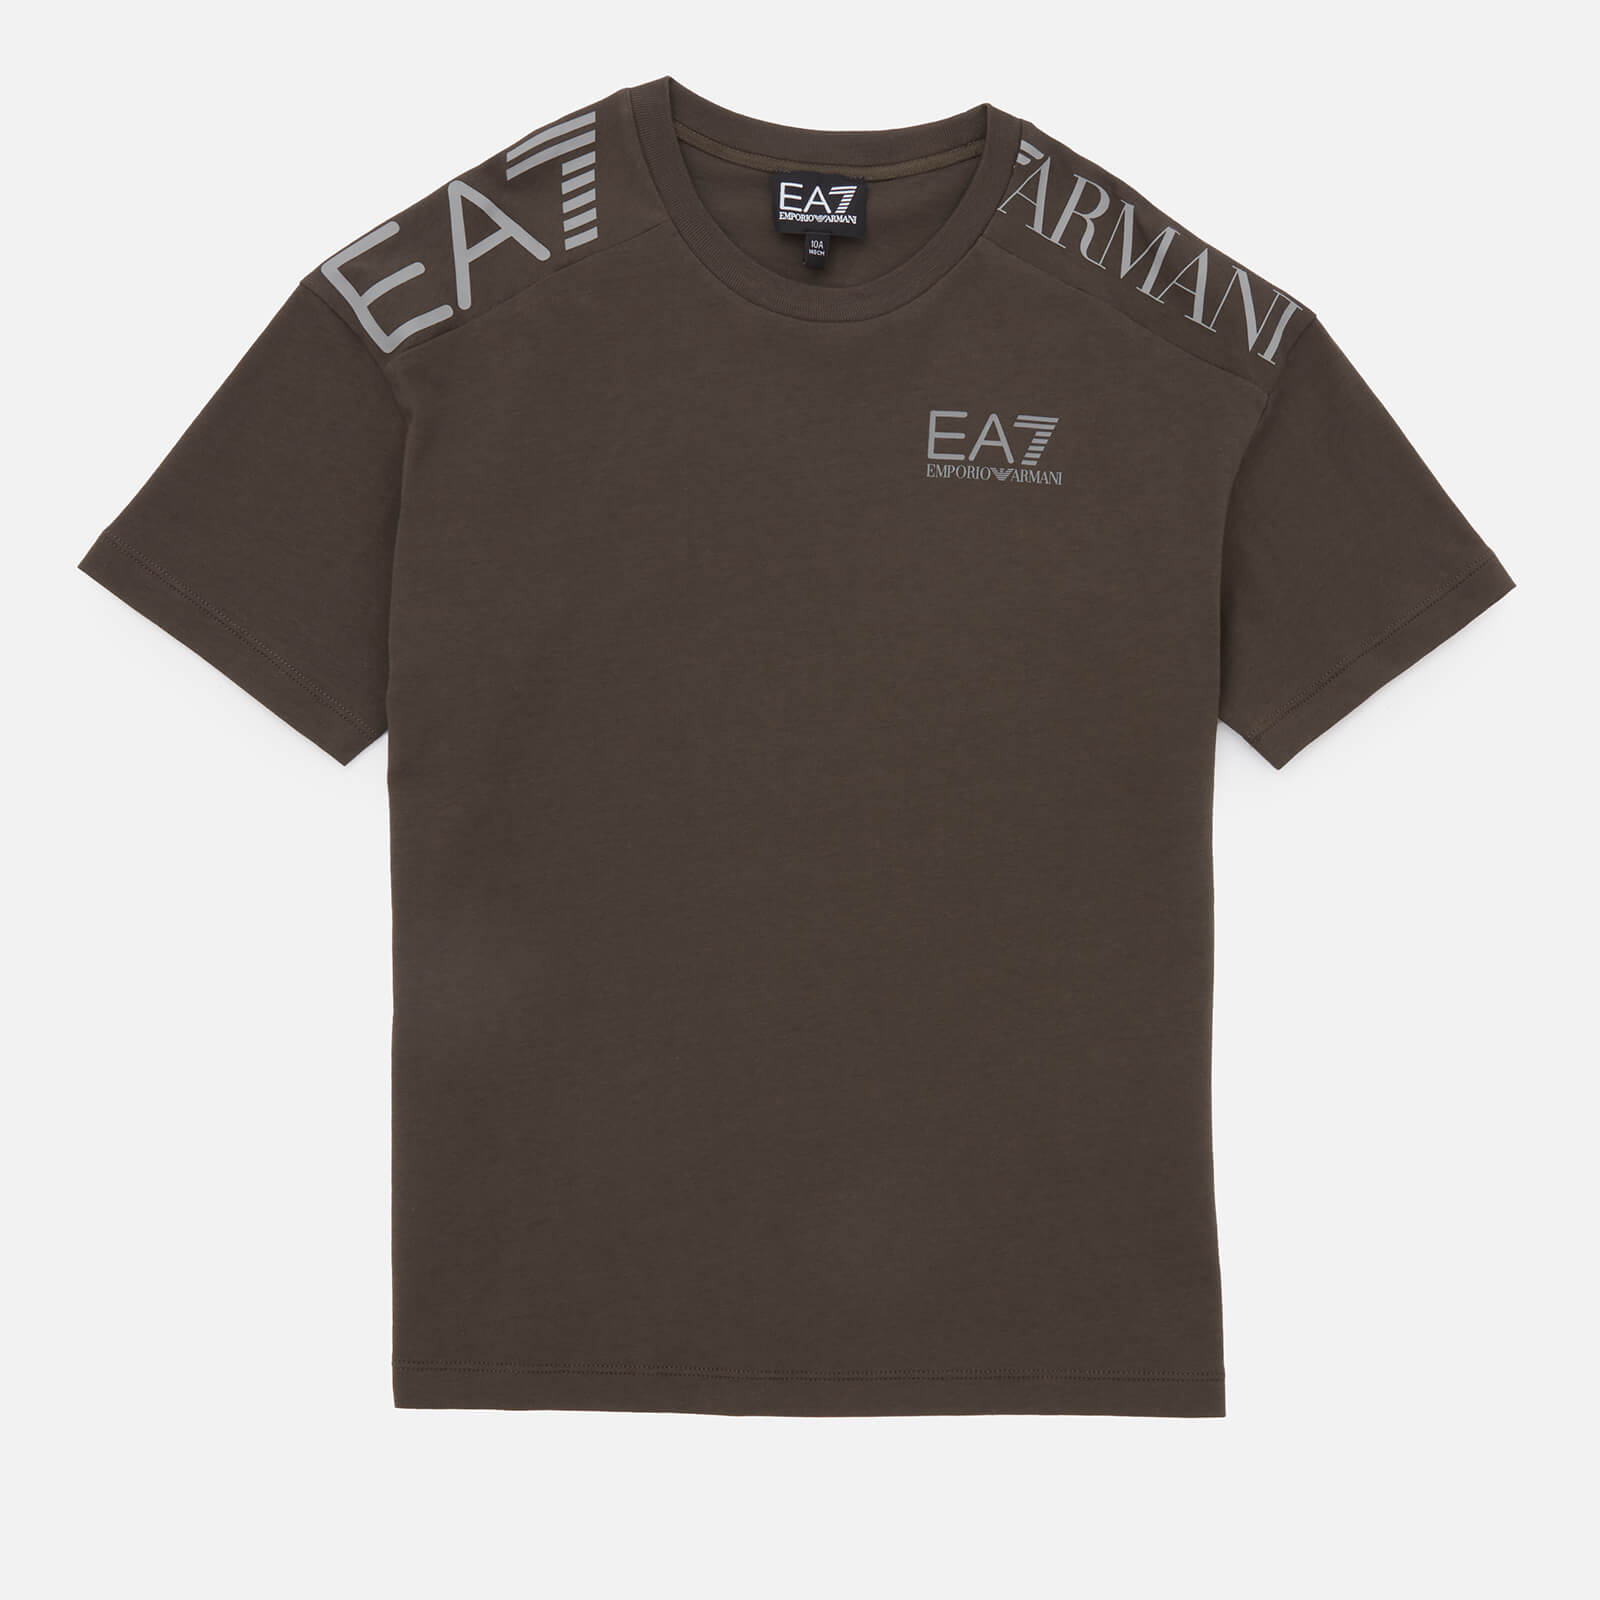 Emporio Armani Boys' Ea7 Cotton T-Shirt - 4 Years